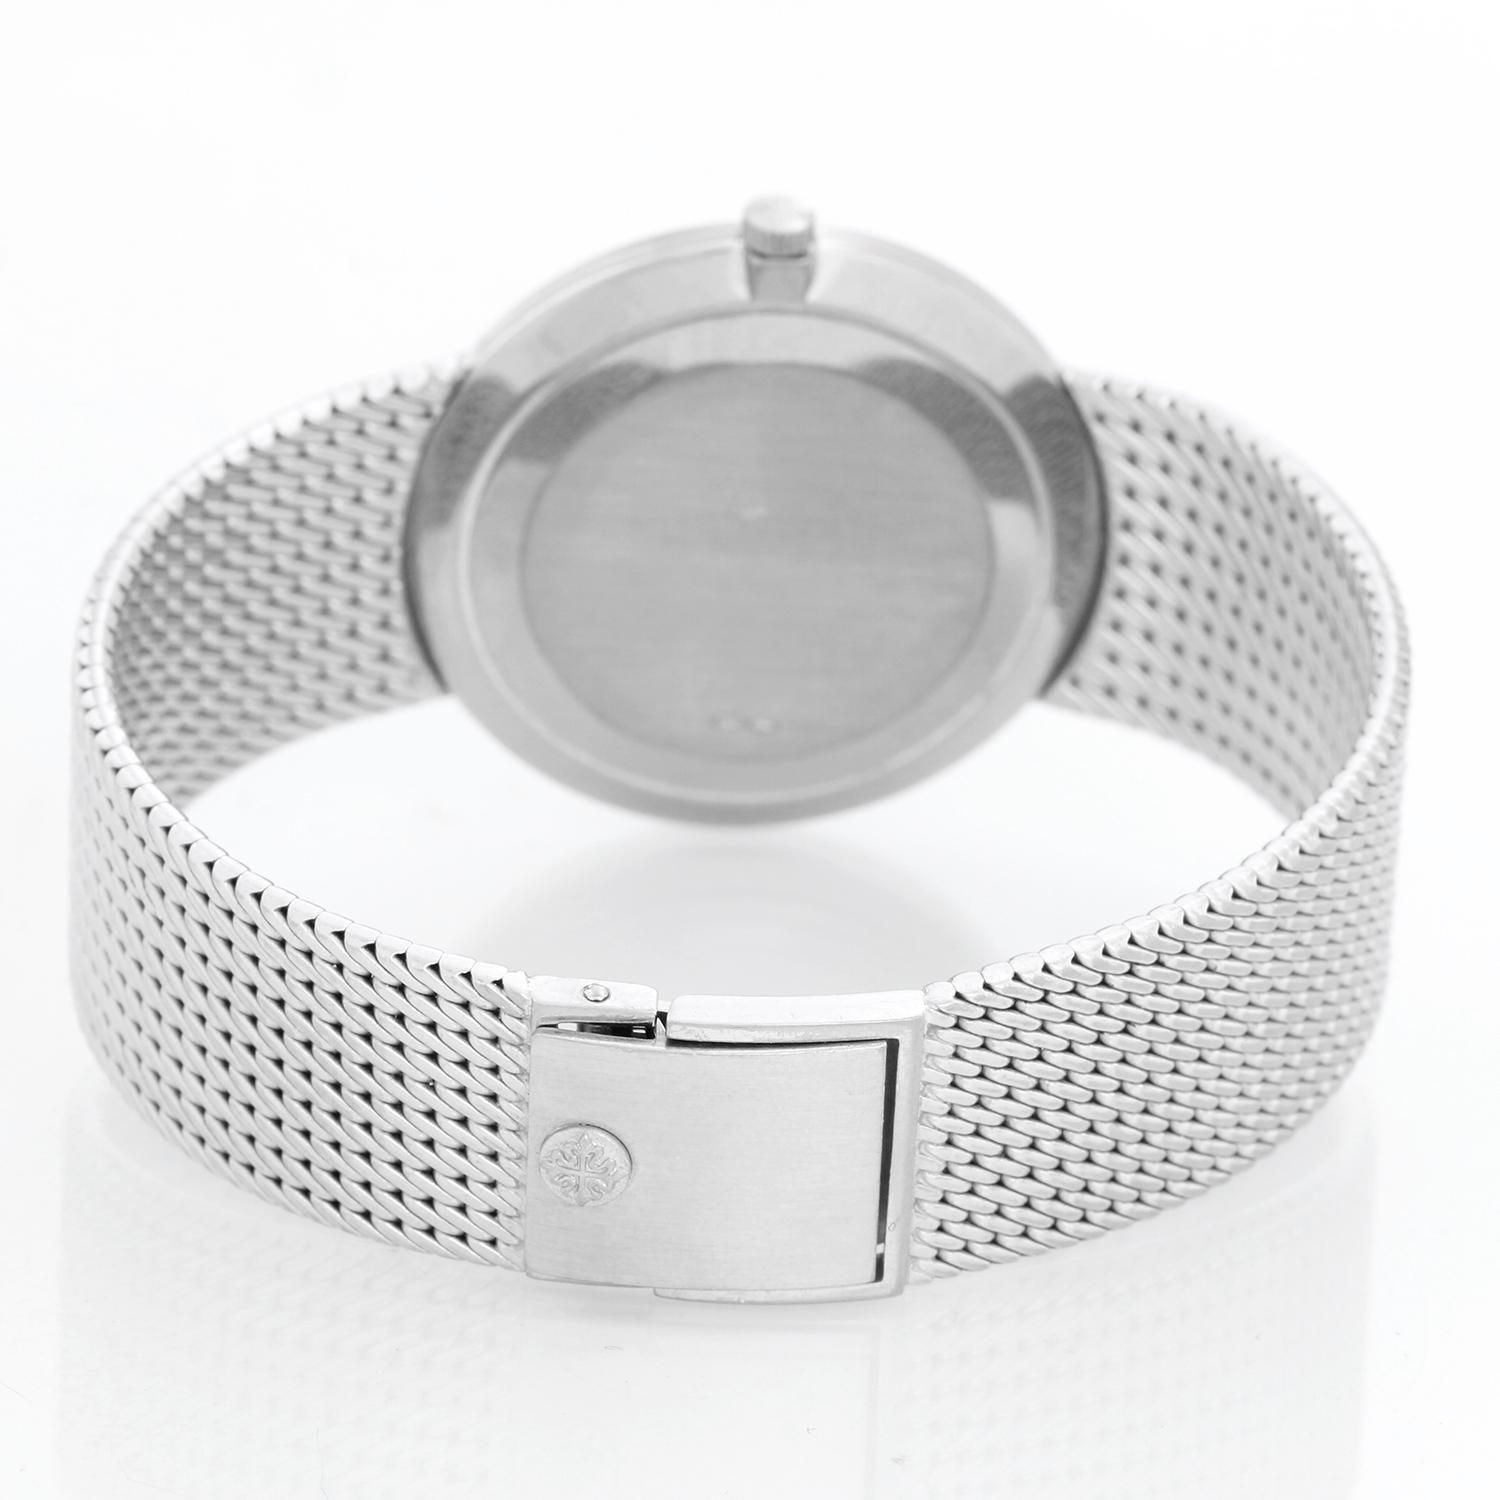 Patek Philippe Calatrava Men's 18k White Gold Watch. Ref. 3893 1